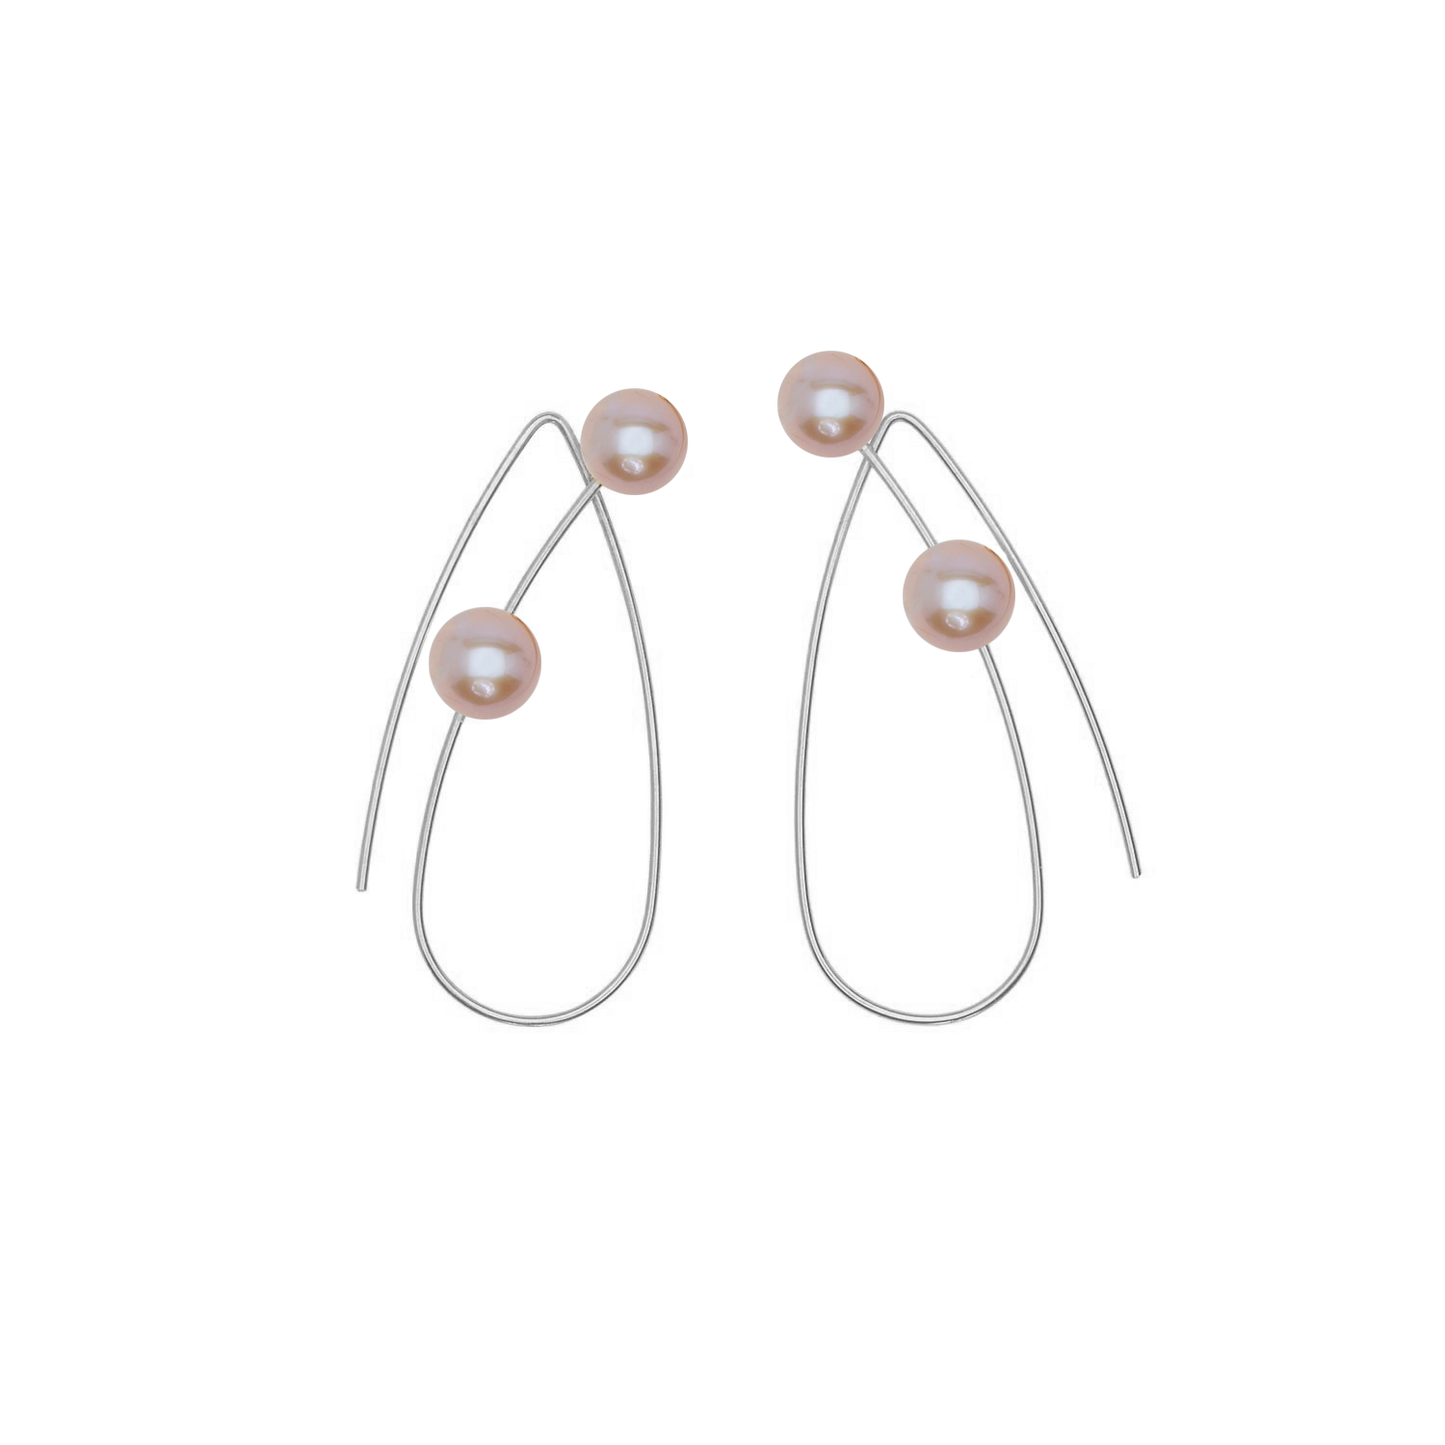 Pointed Loop Earrings with Round Freshwater Pearls